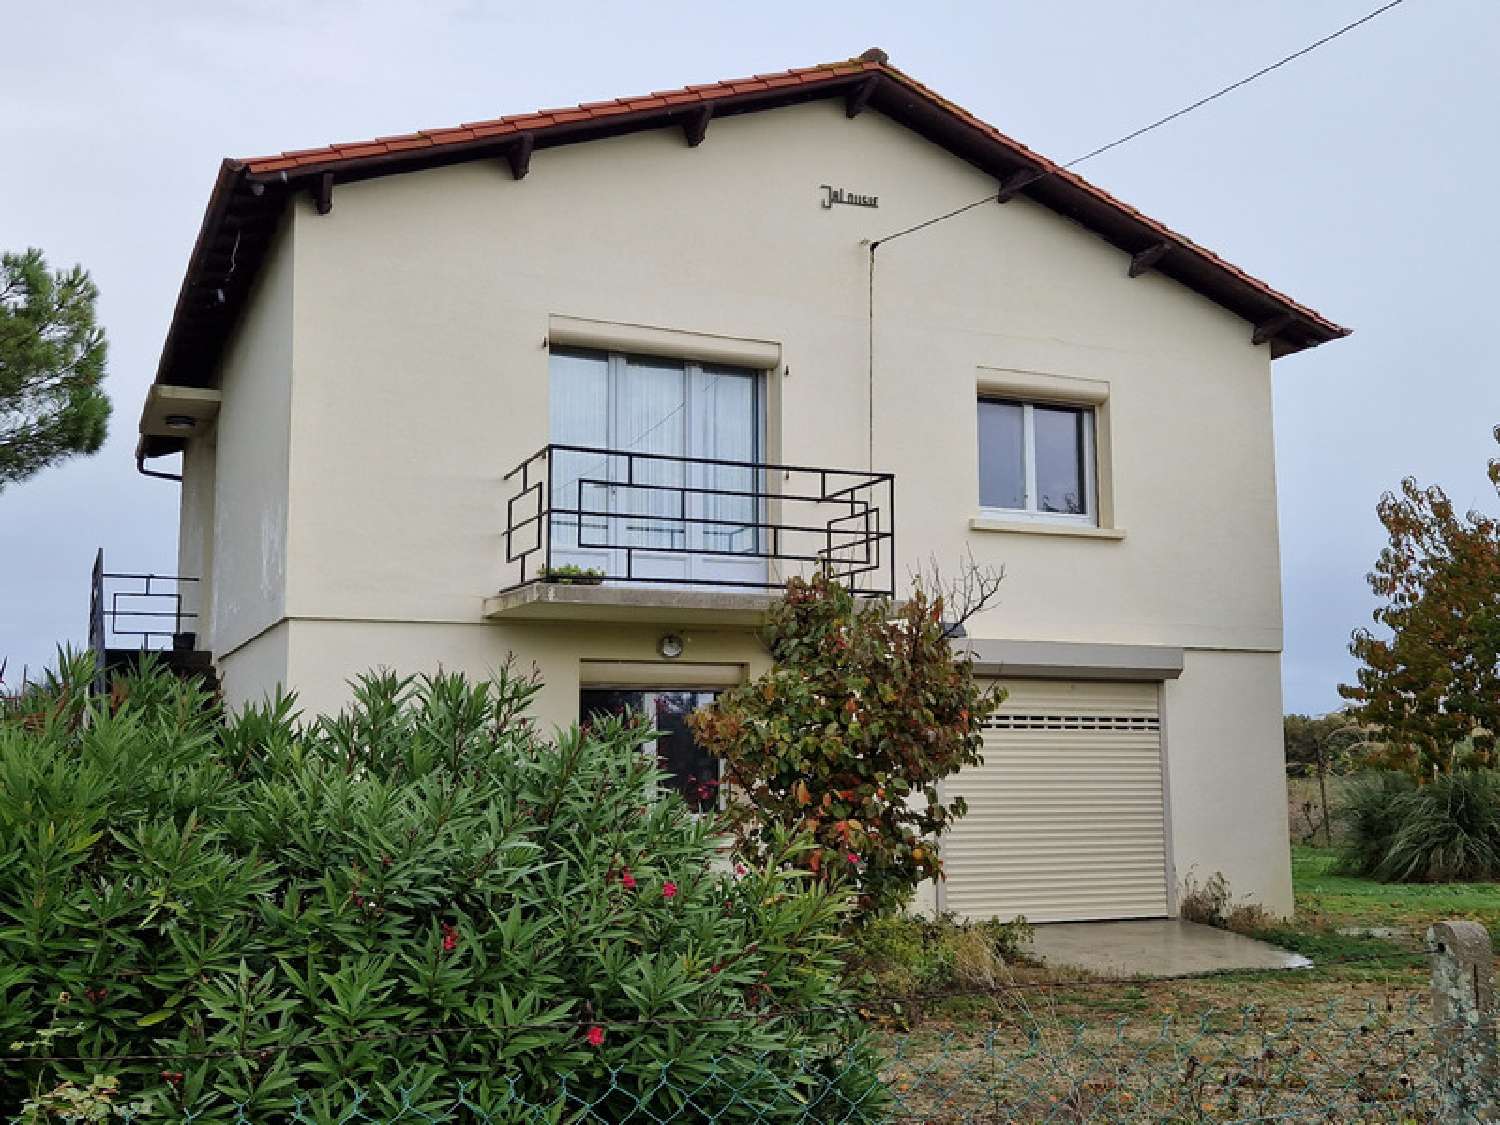  à vendre maison Loulay Charente-Maritime 1